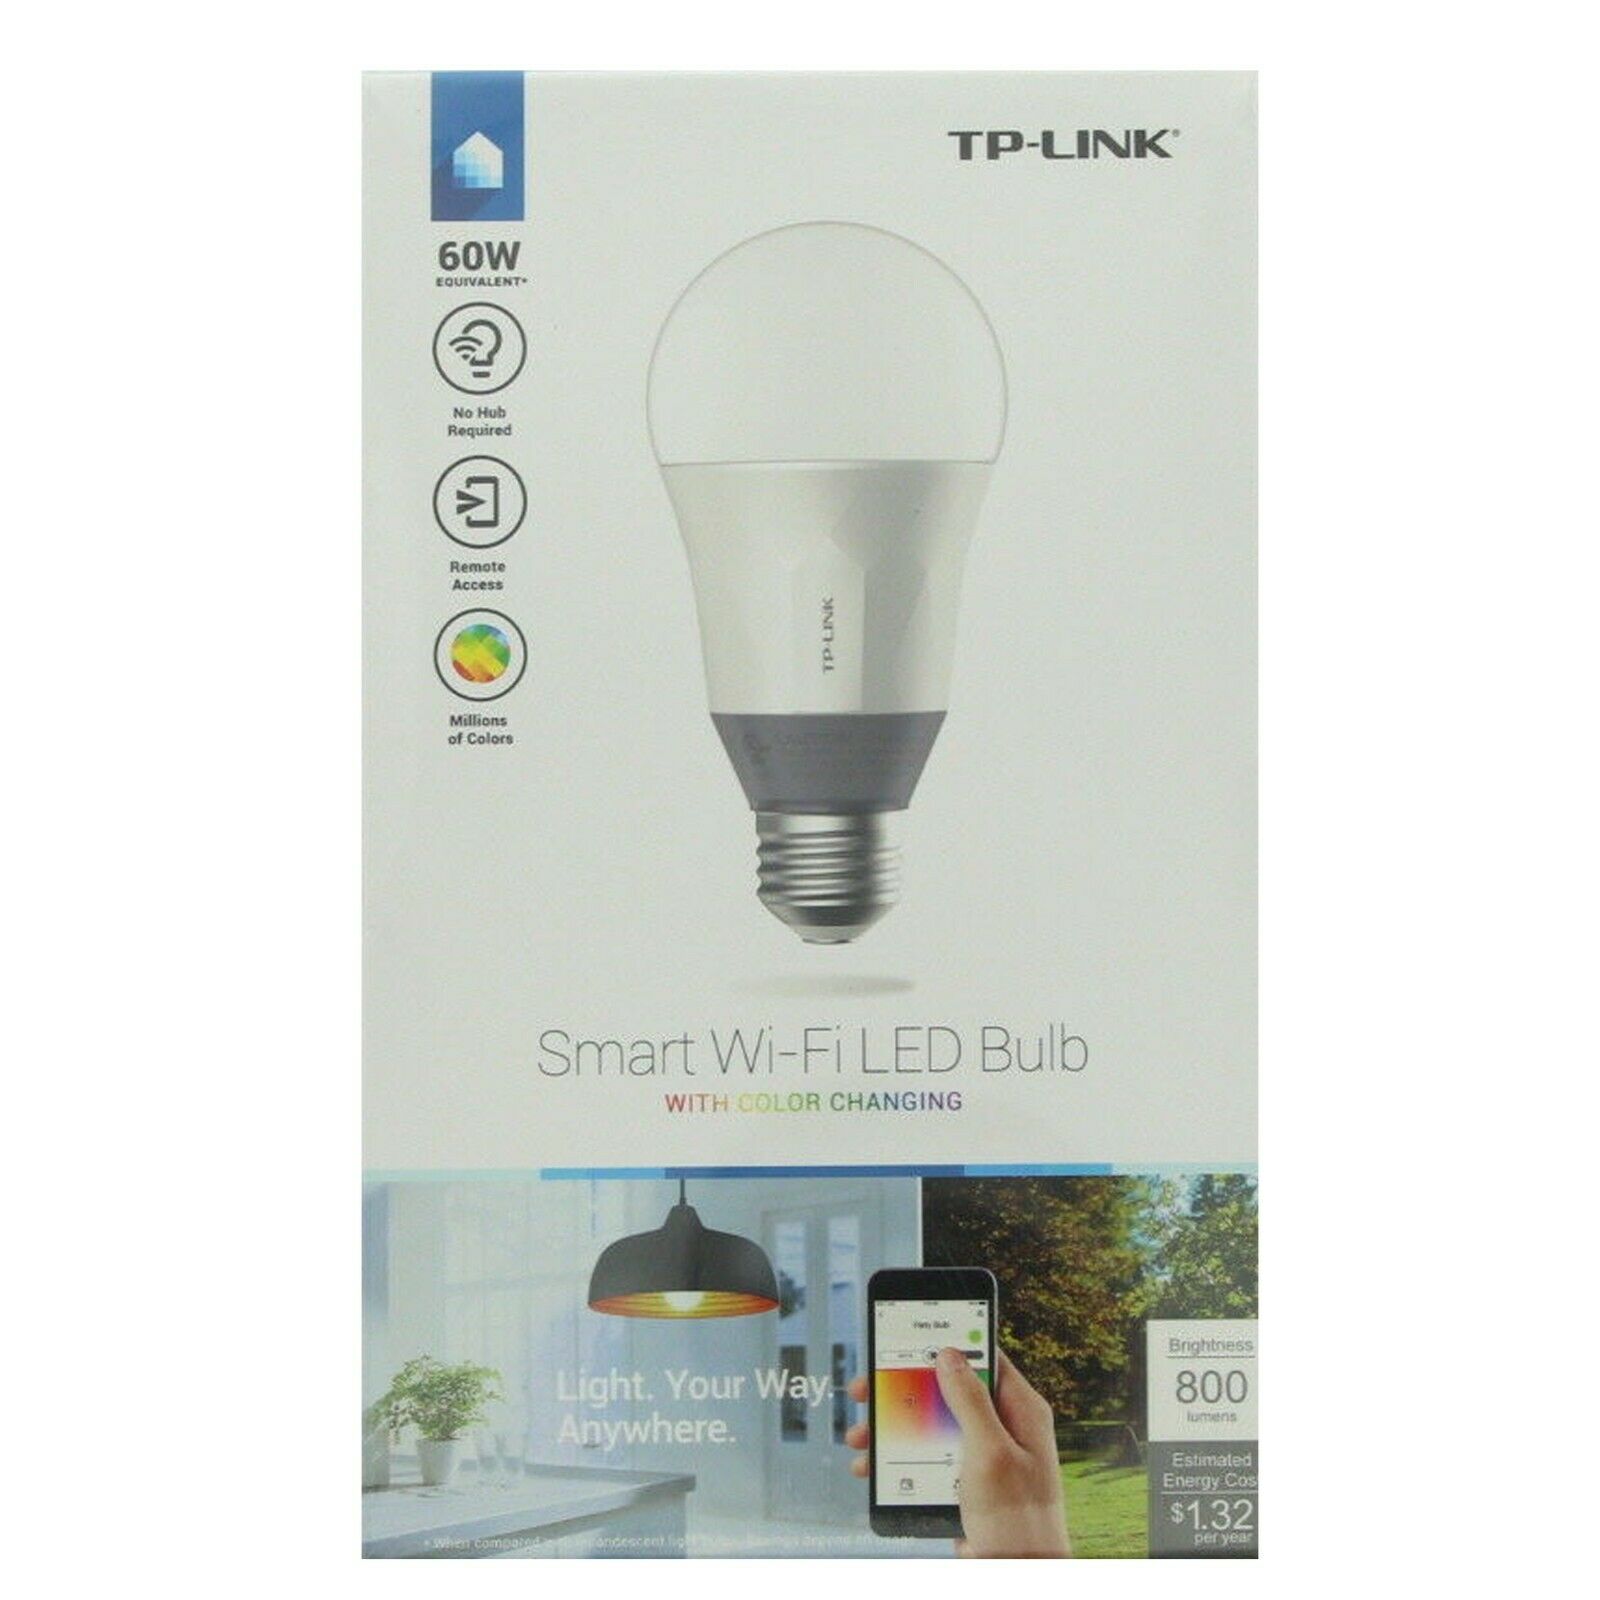 Tp-link Smart Light Bulb Wi-fi Led A19 Lb130 Dimmable Color Change, Alexa Google